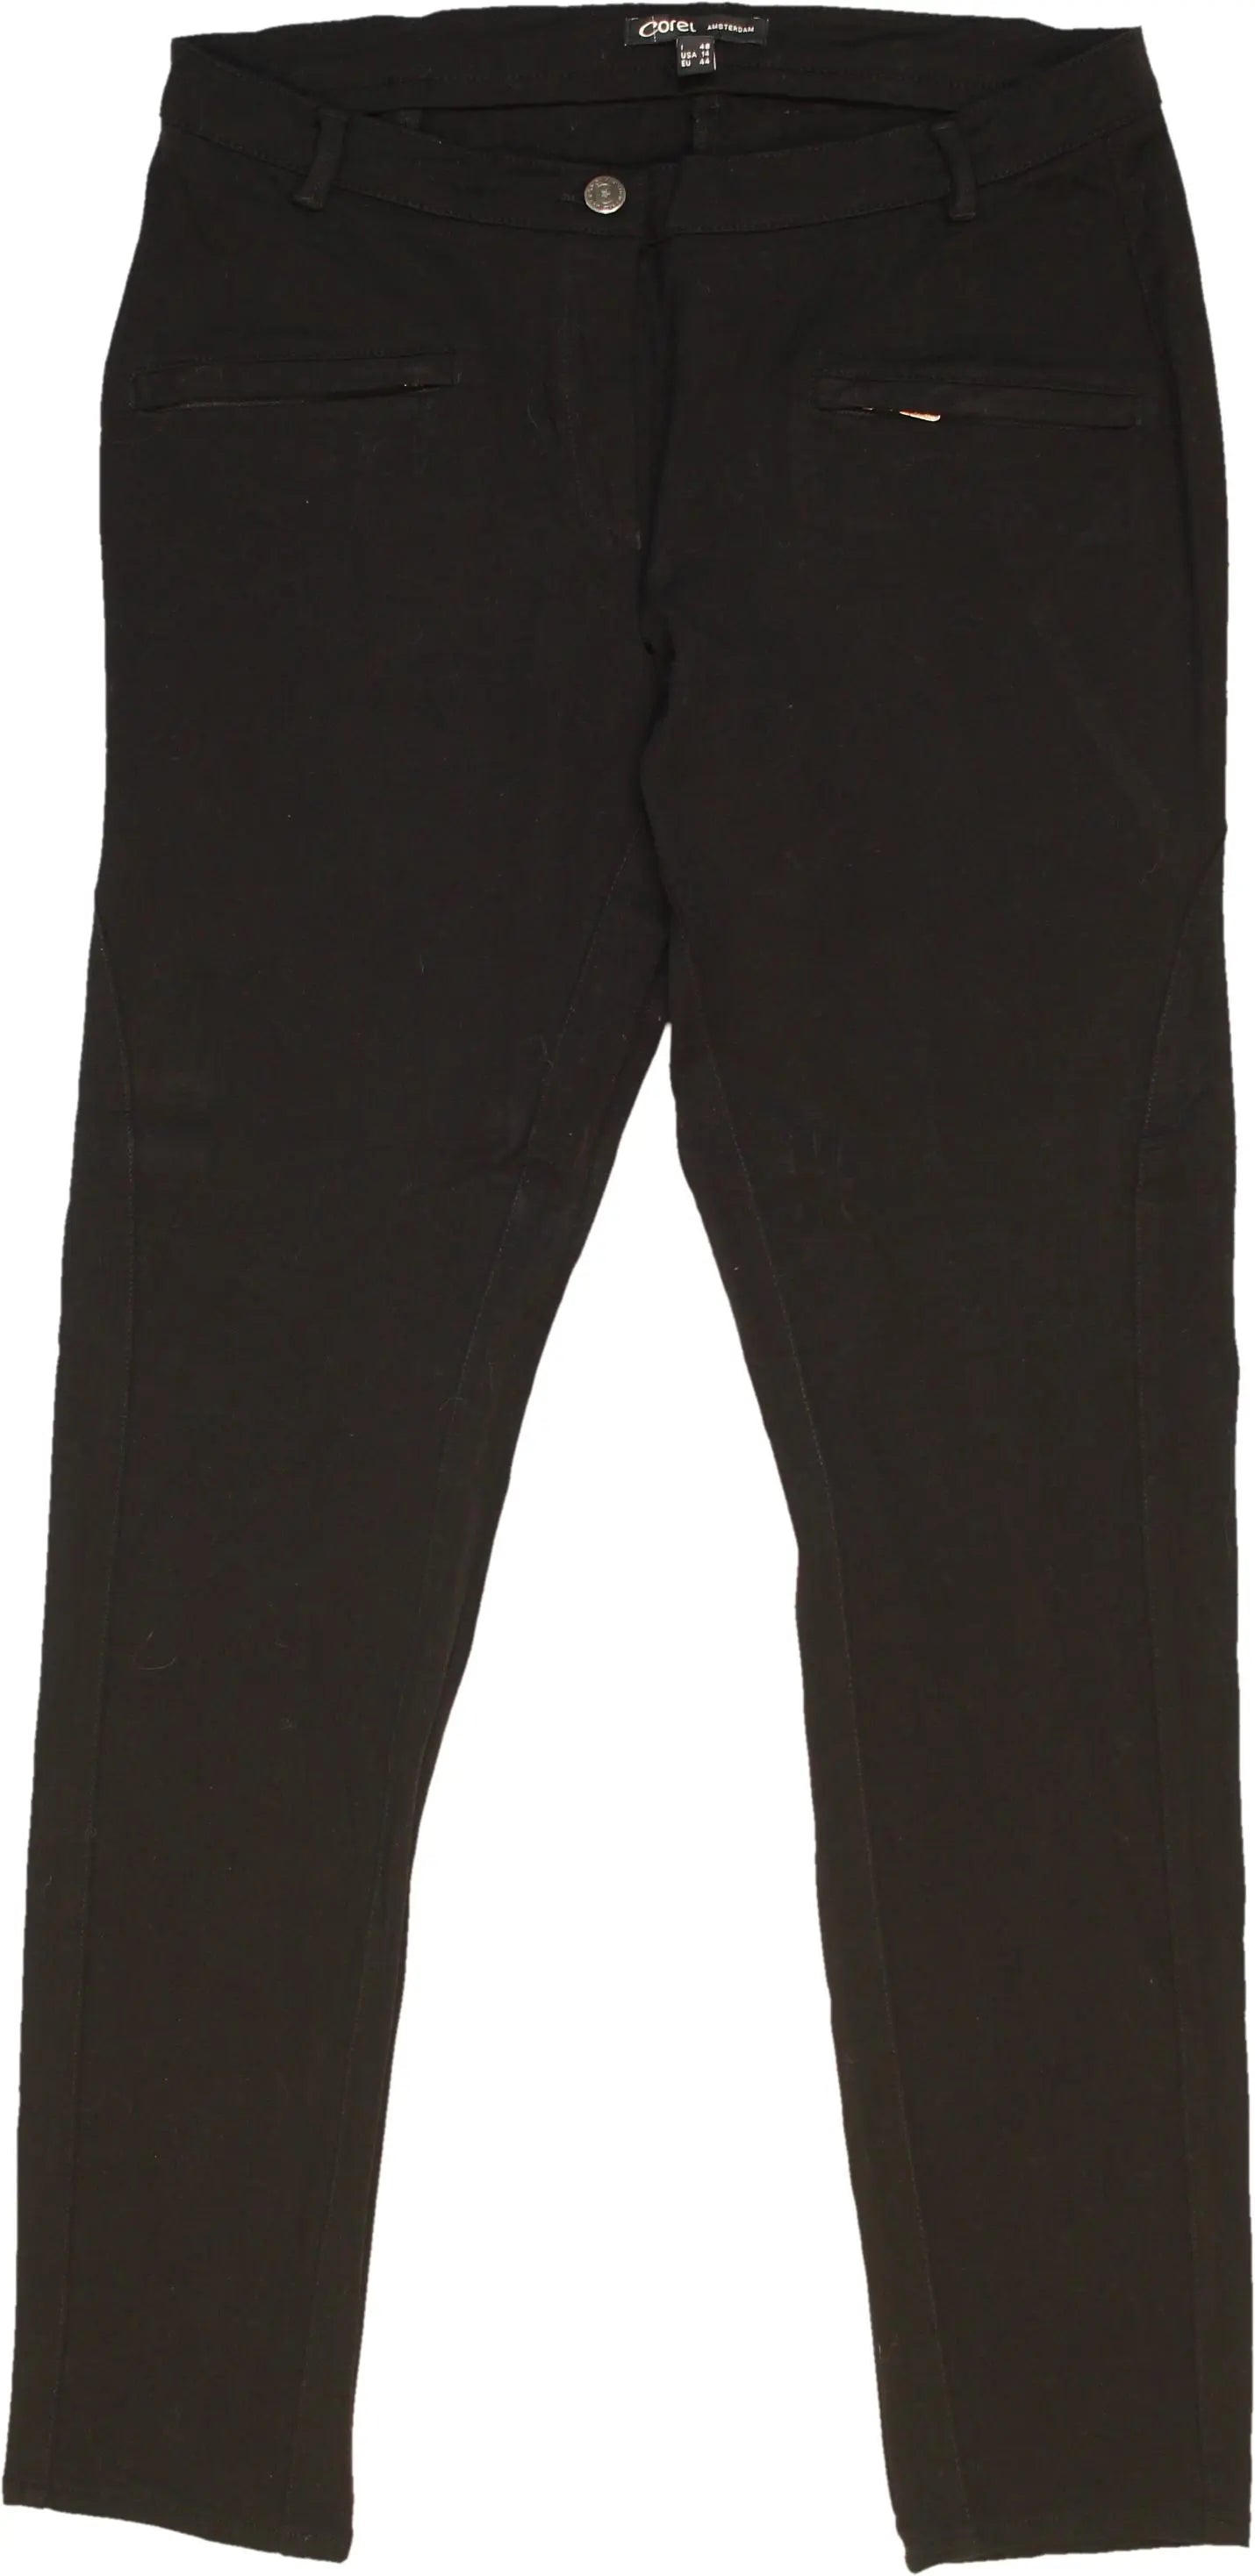 Corel - Black Pants- ThriftTale.com - Vintage and second handclothing